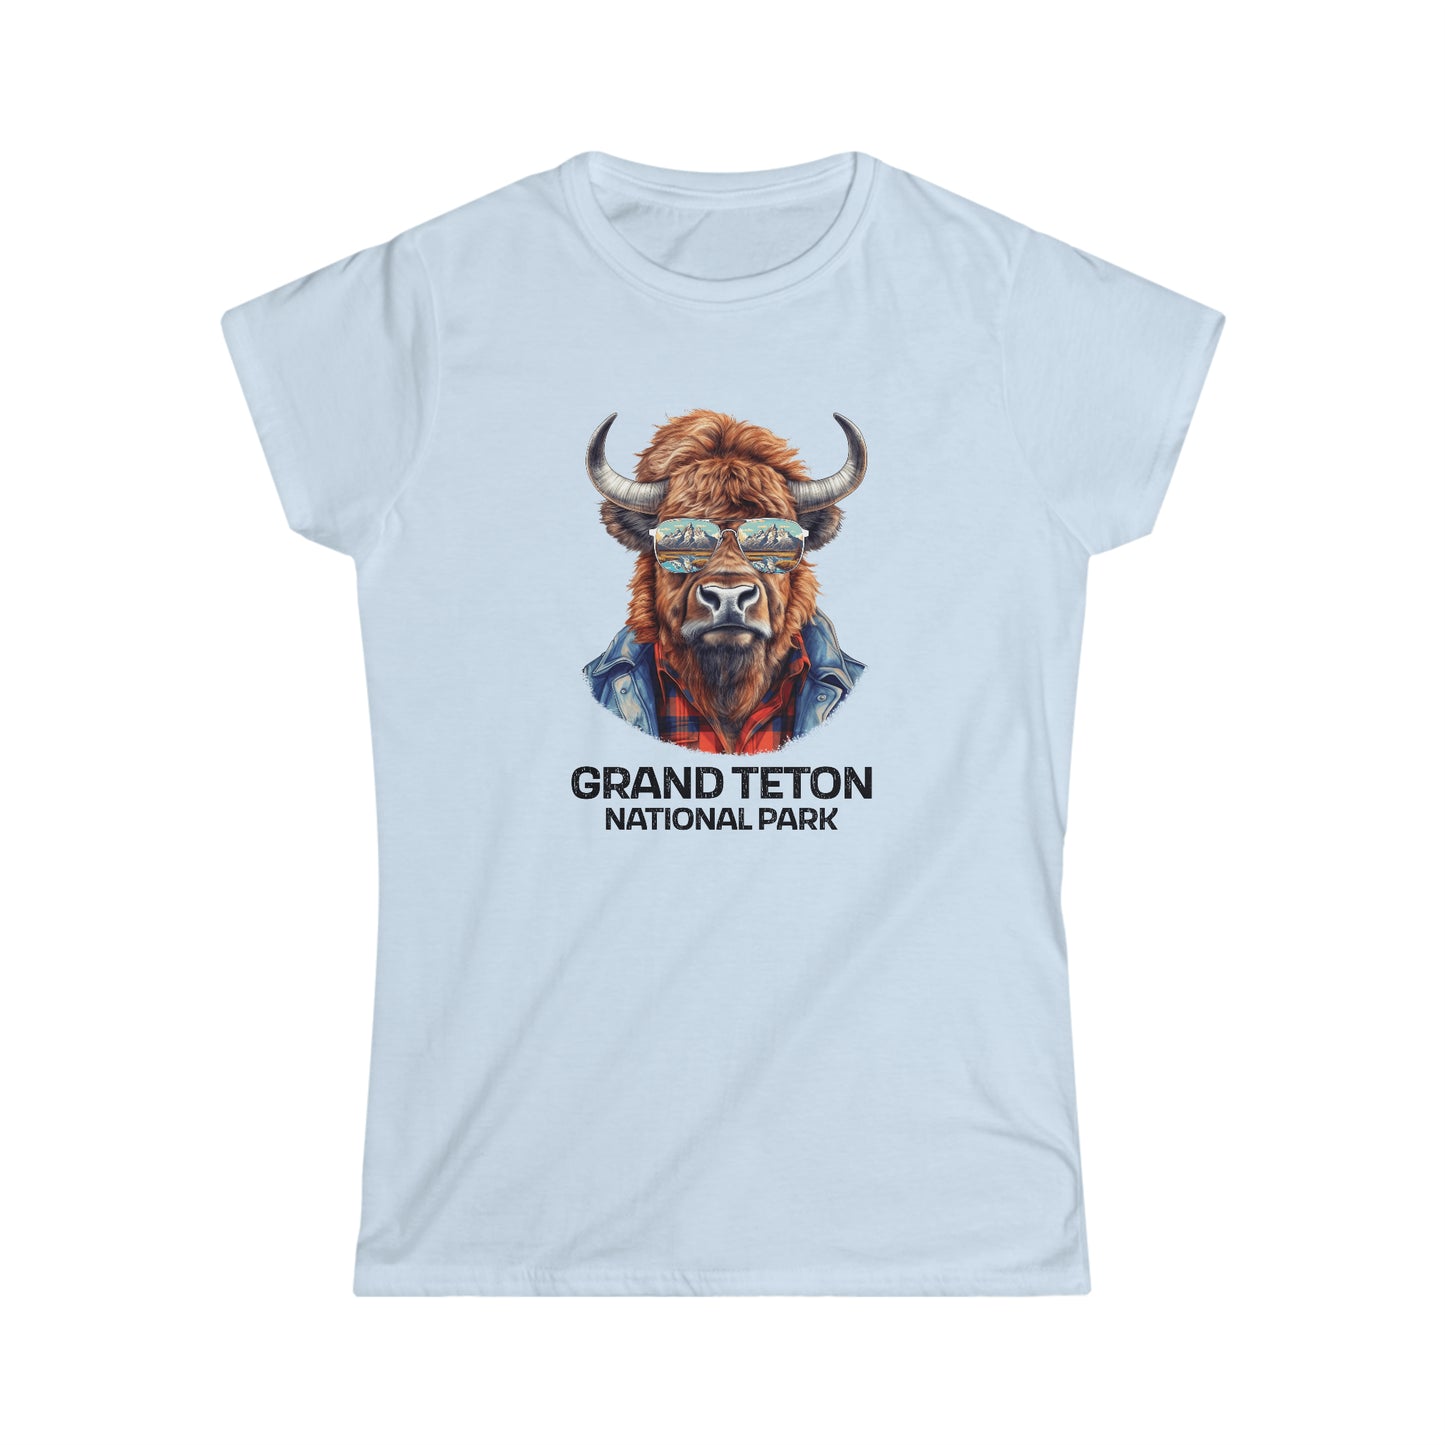 Grand Teton National Park Women's T-Shirt - Cool Bison